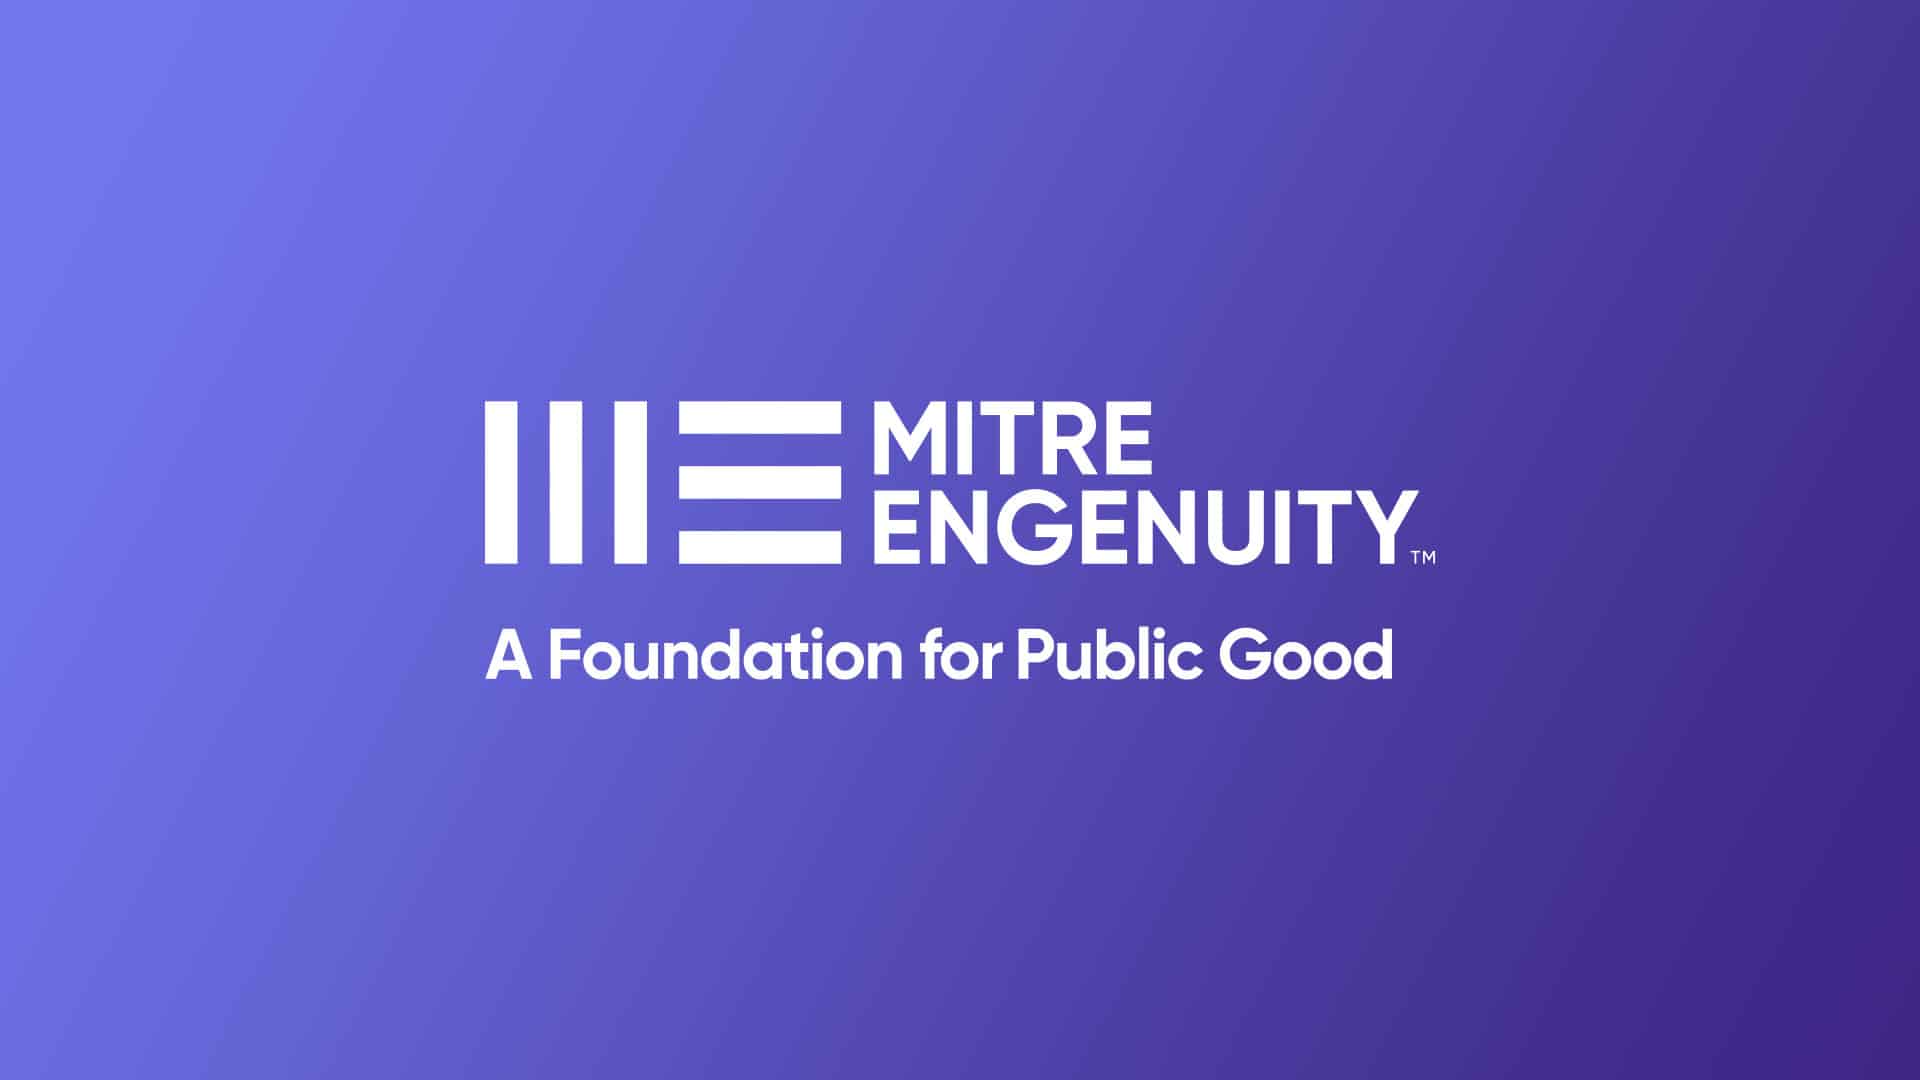 MITER Engenuity هي منظمة تقييم معروفة تدرس فعالية منتجات وحلول الأمن السيبراني.